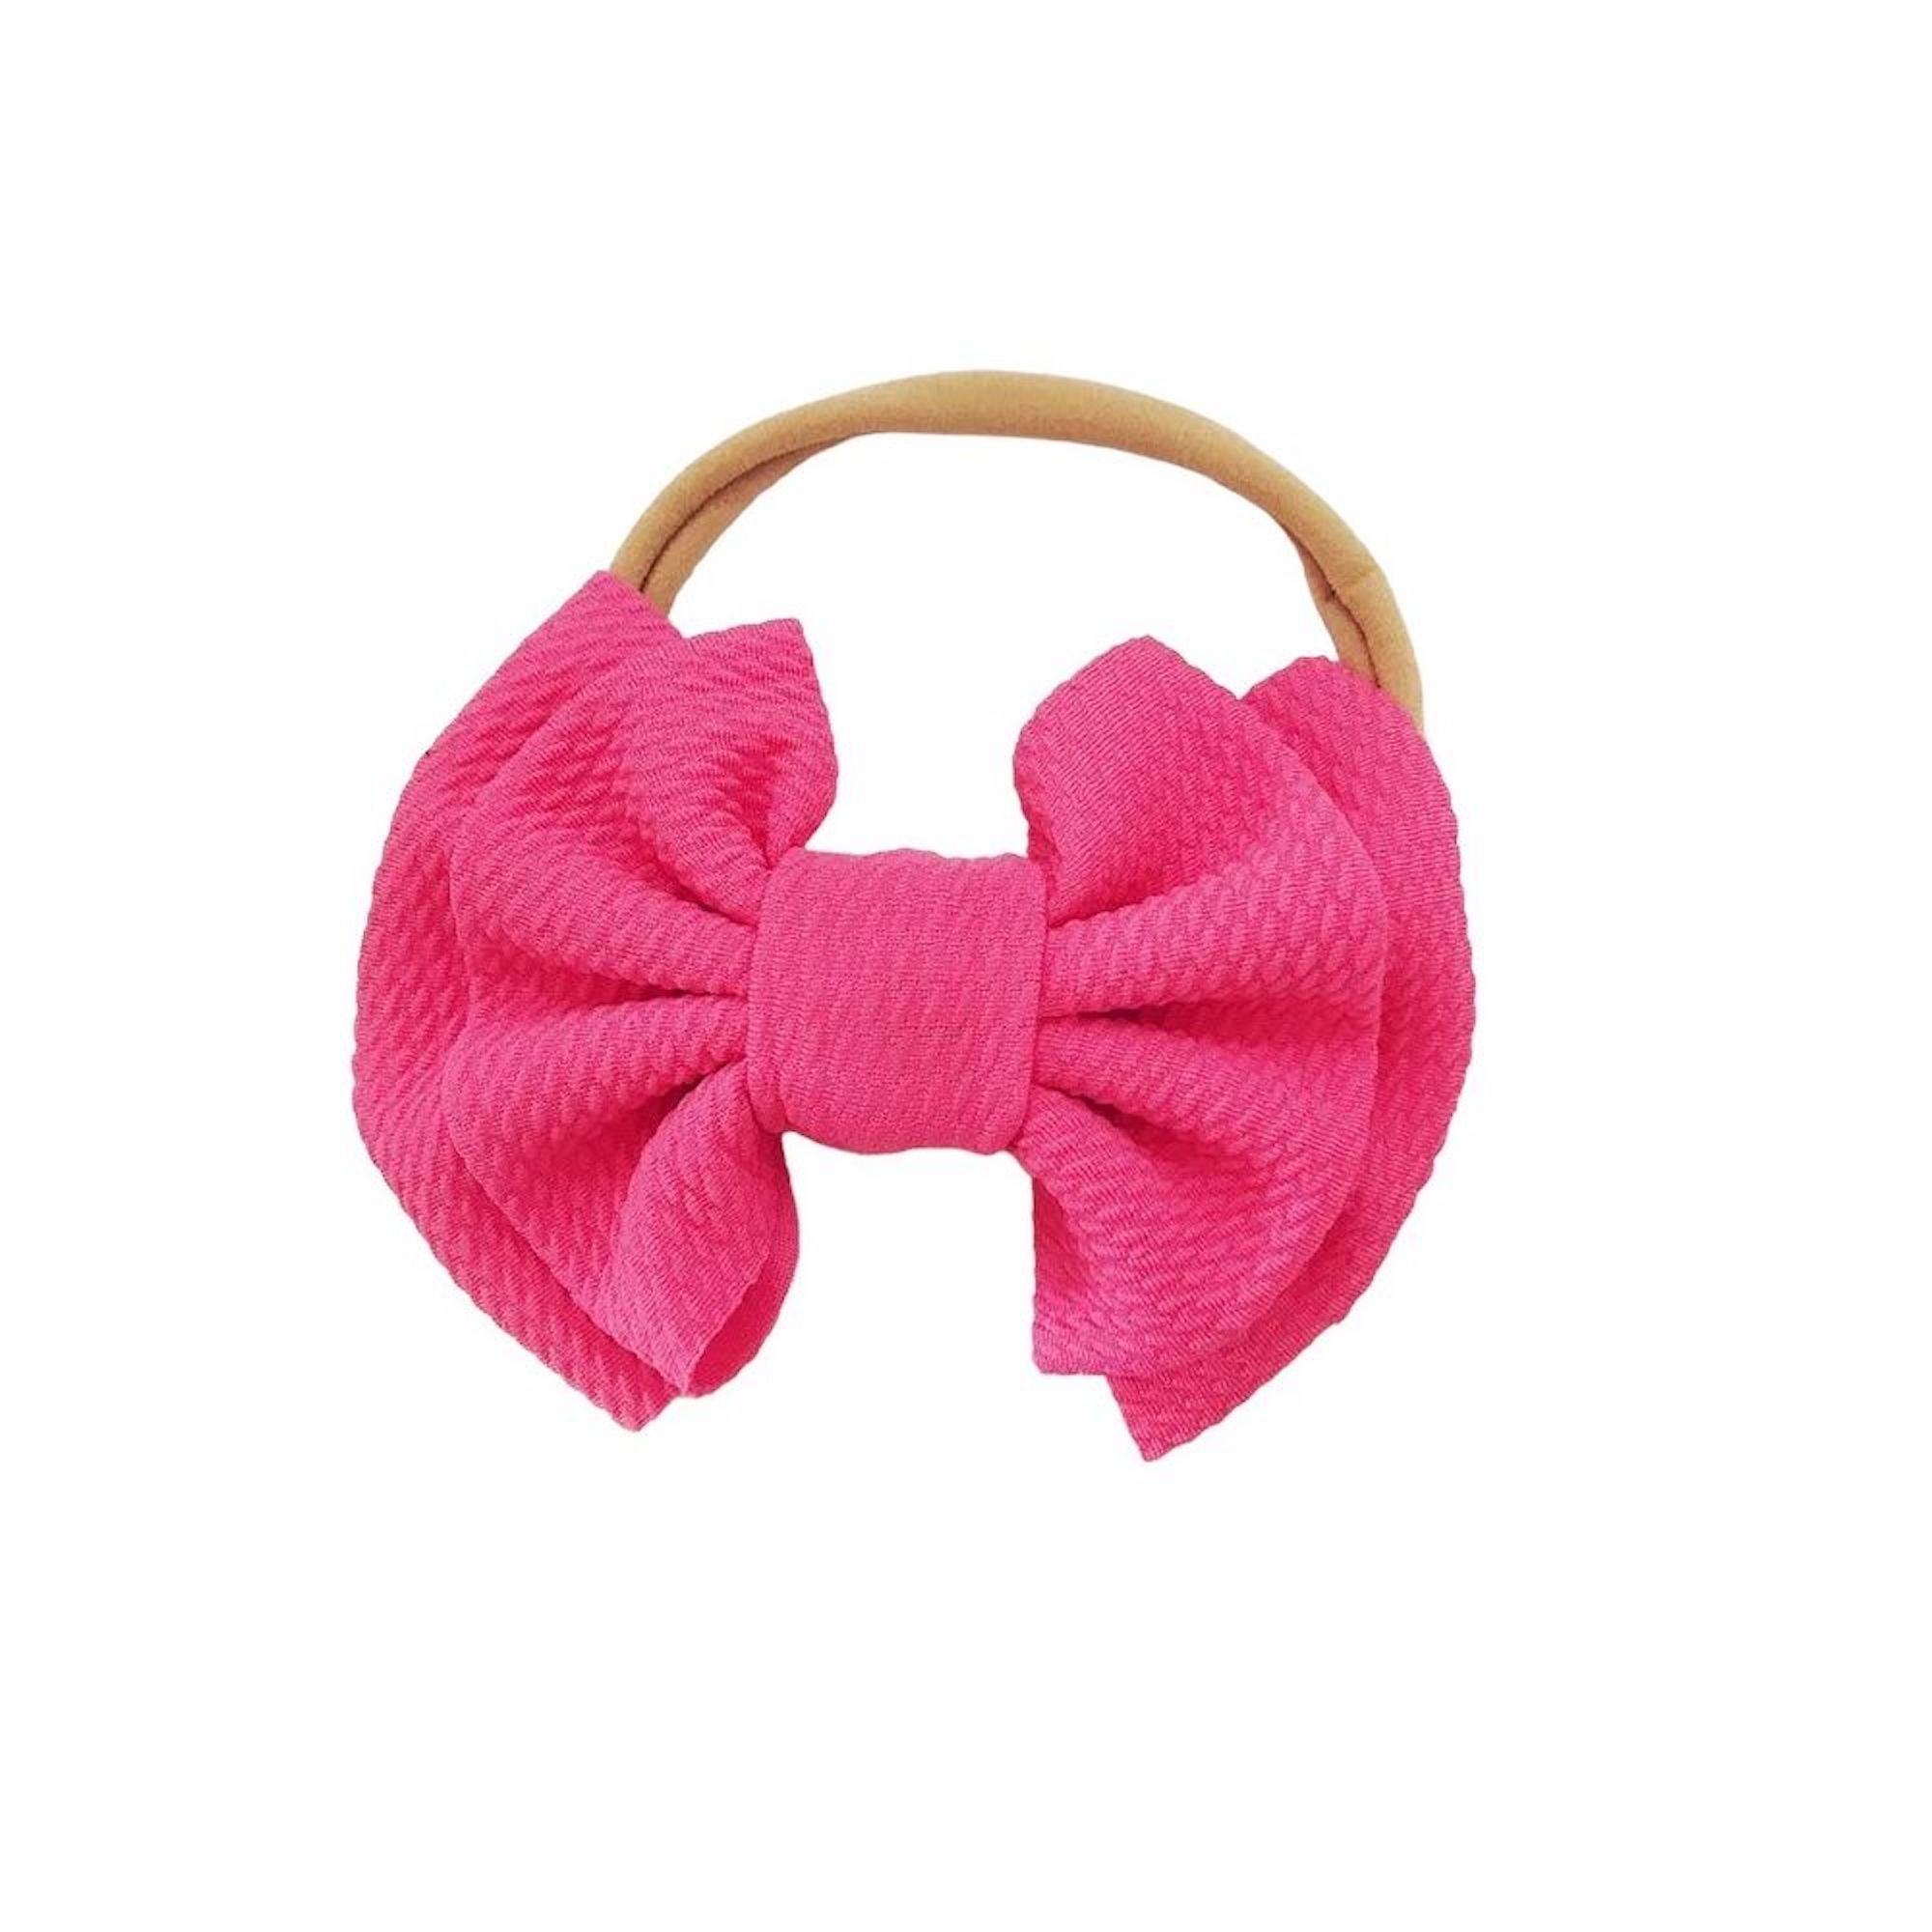 Big Bow Headband | Baby Girl Headband | Toddler Headband | Soft Headband For Girls | Gifts For Girls | Hair Accessories Girls | Hot Pink Headband for girls